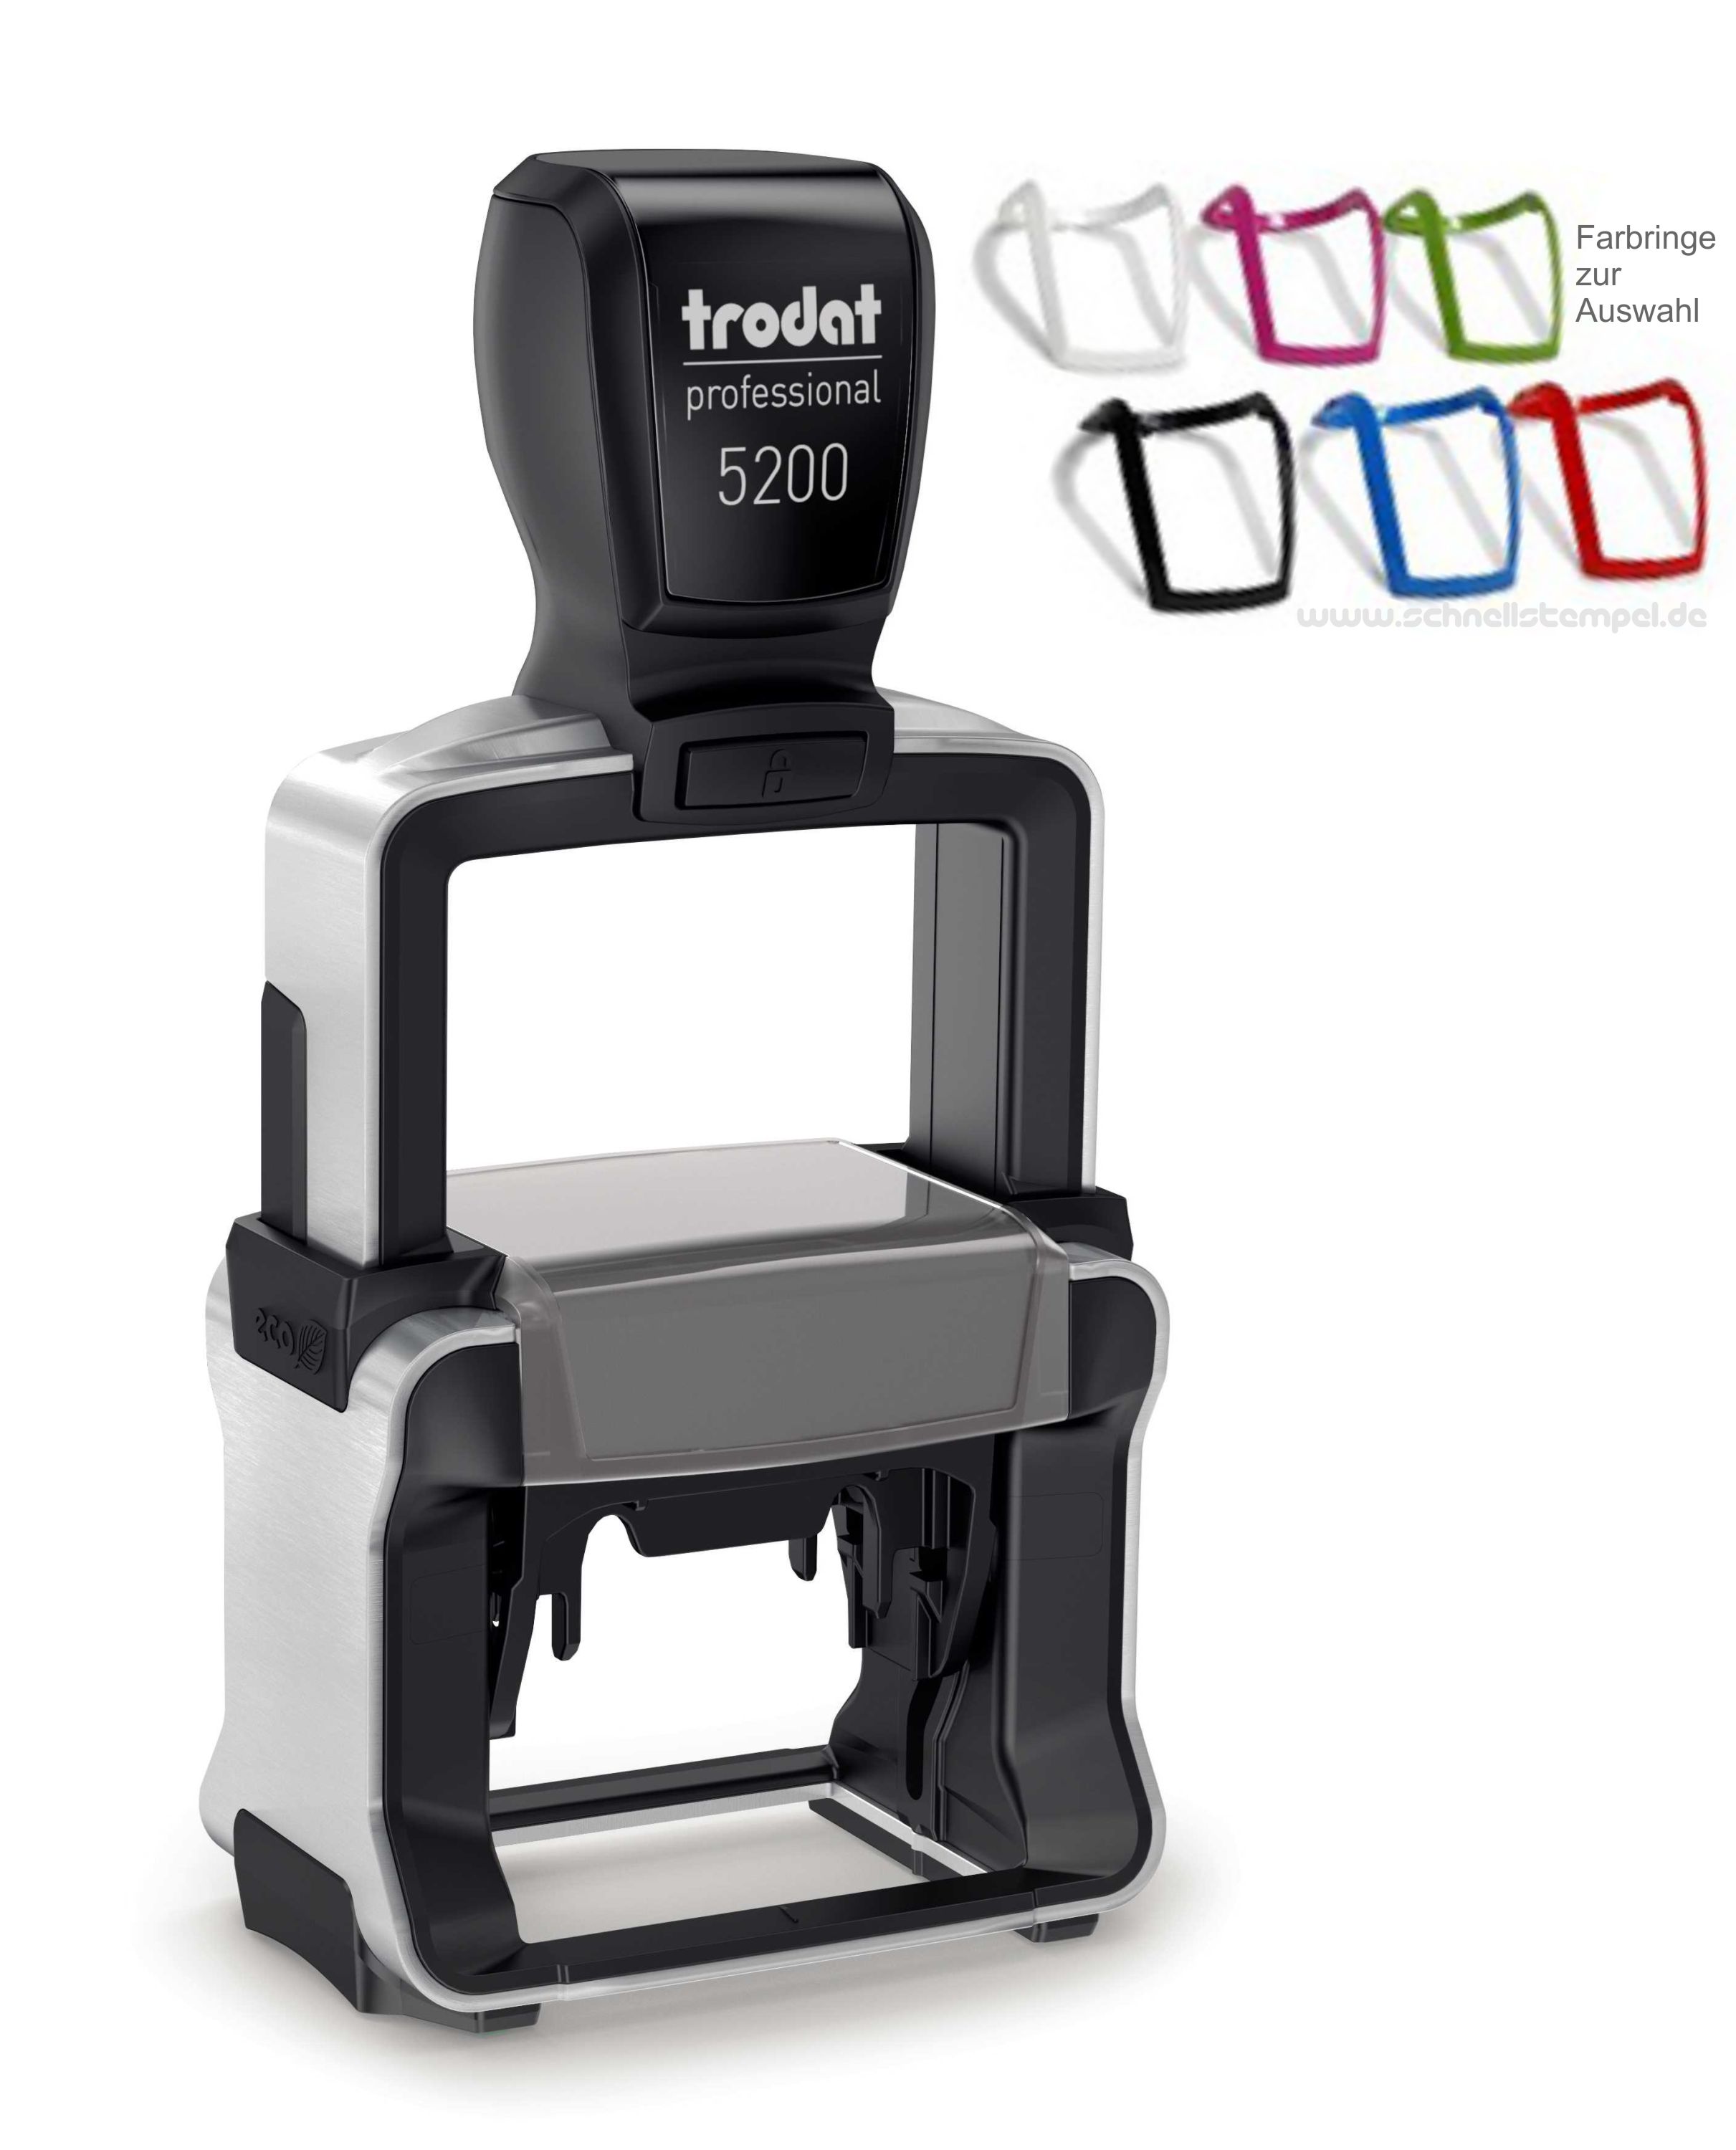 Trodat-Professional-5200-P4.0 Kopie